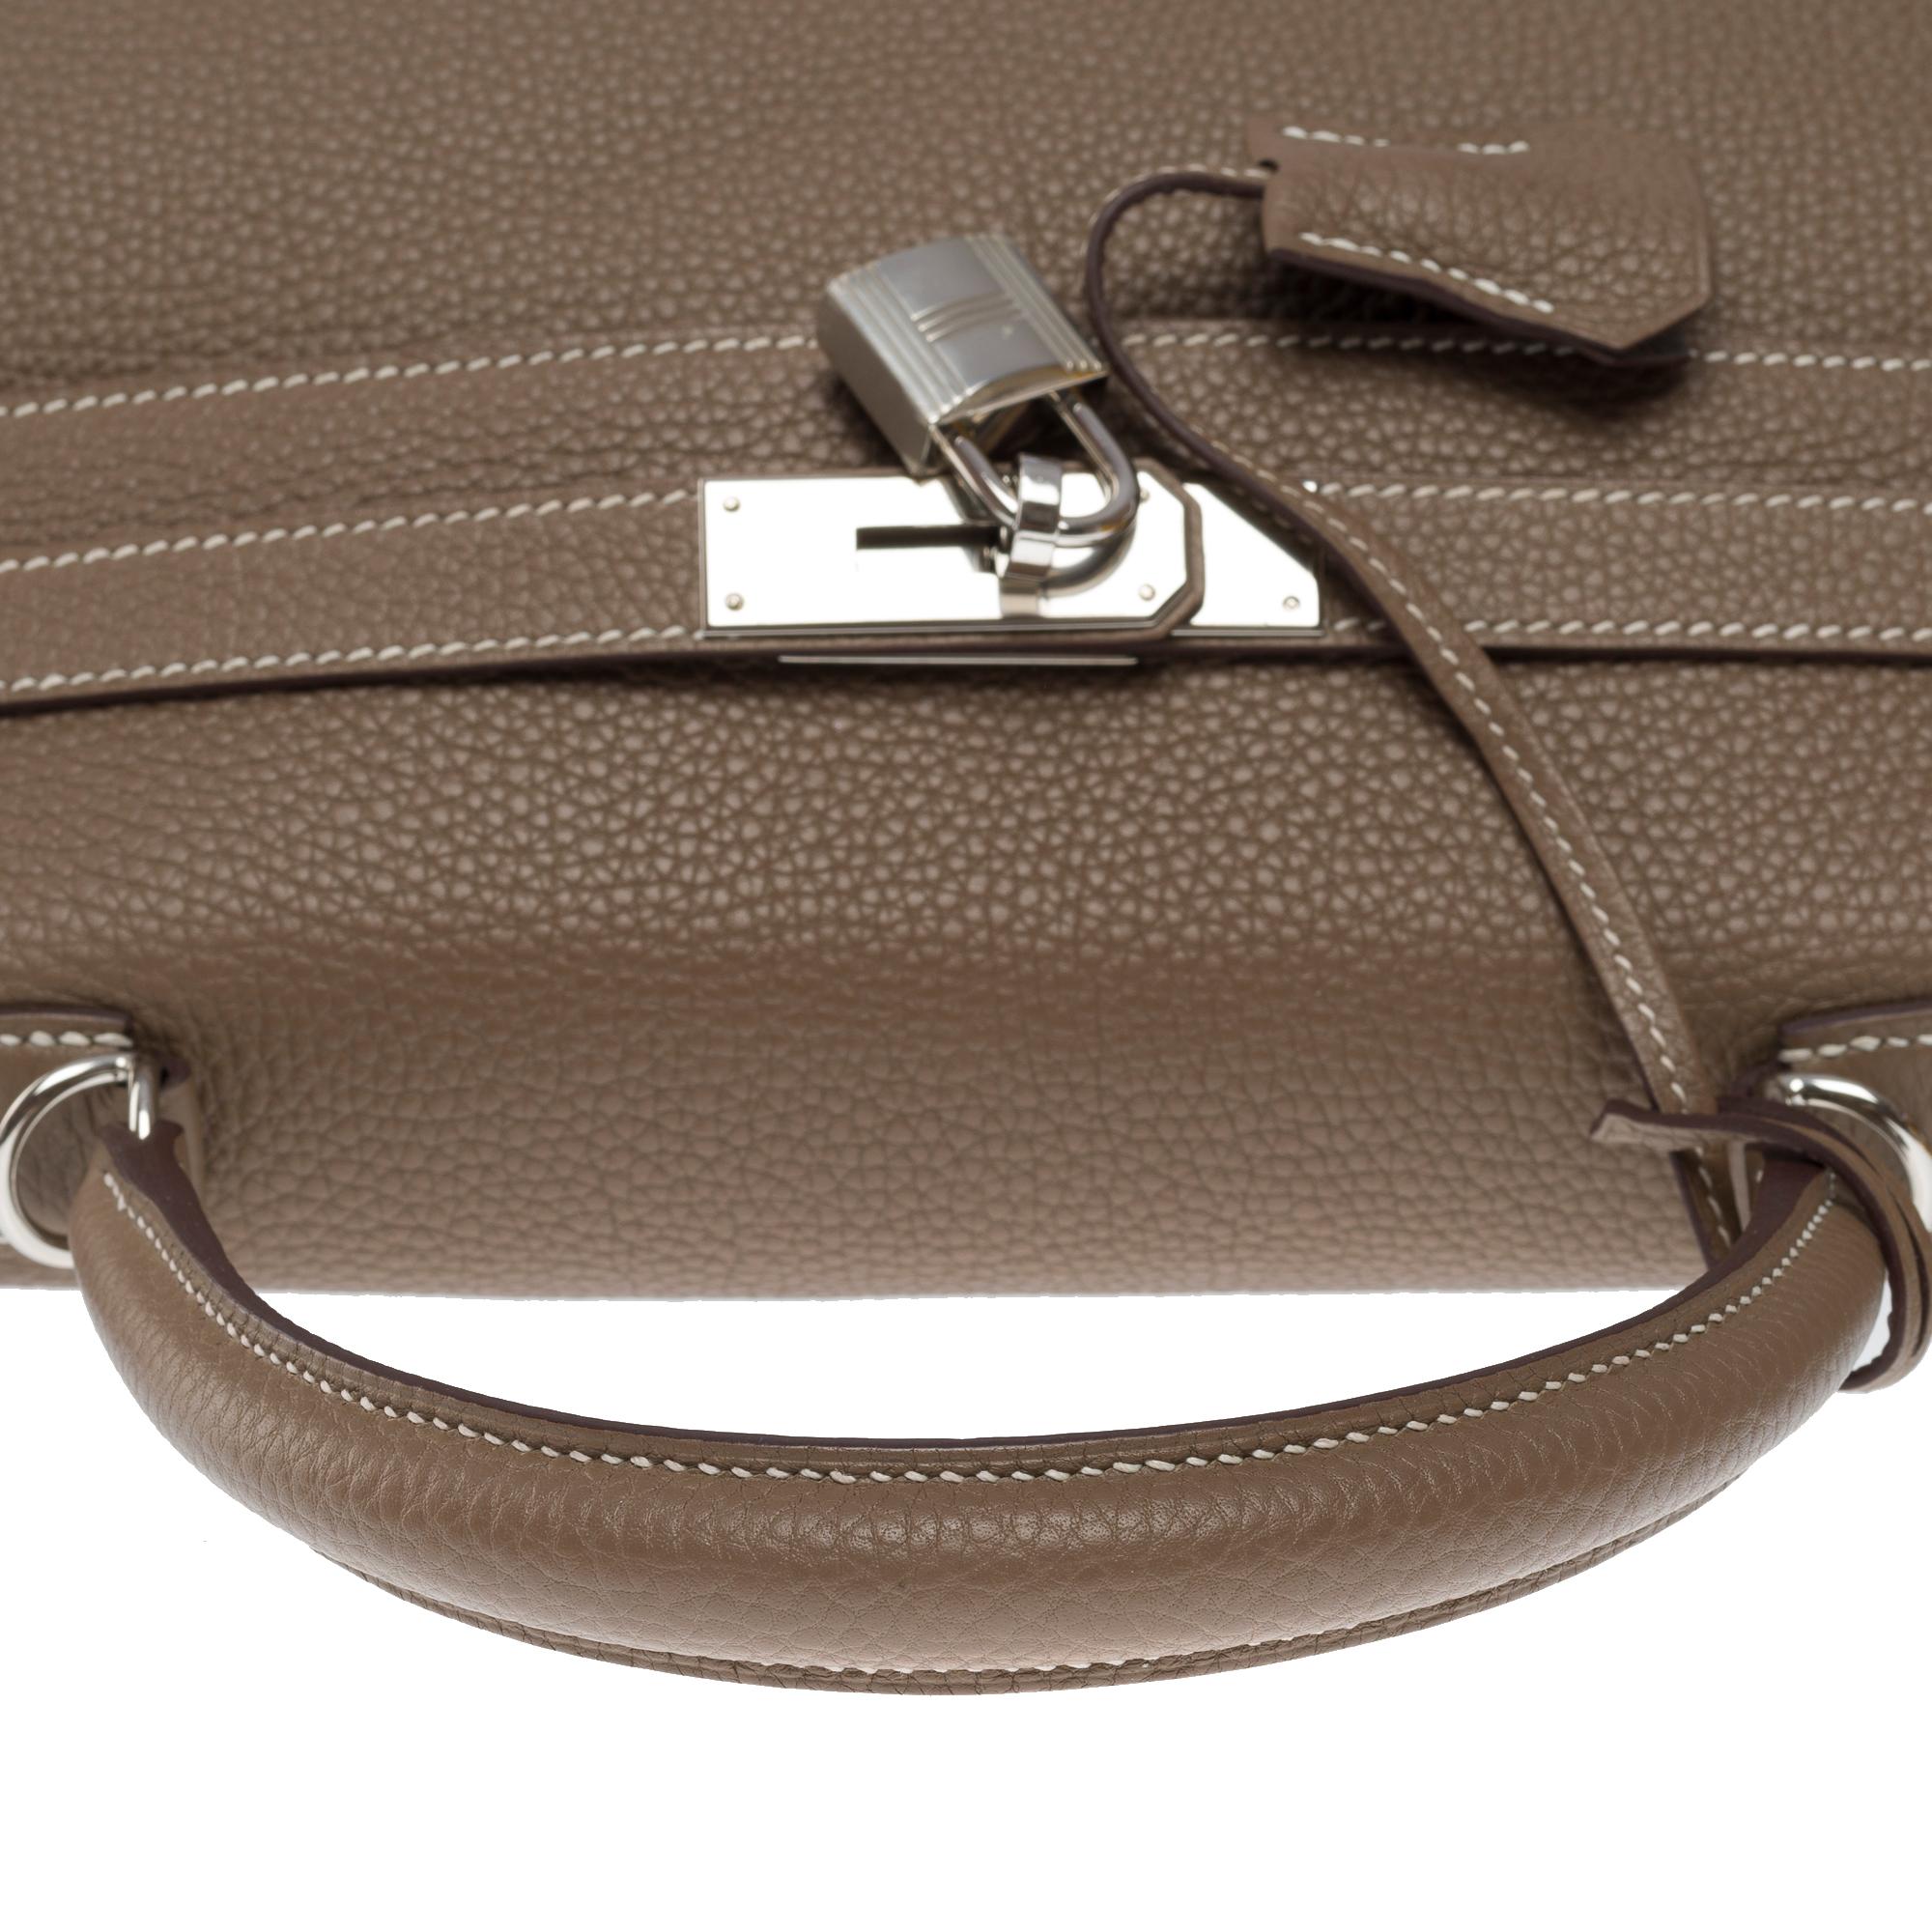 Almost New Hermès Kelly 35 retourne handbag strap in Etoupe Togo leather, SHW For Sale 3